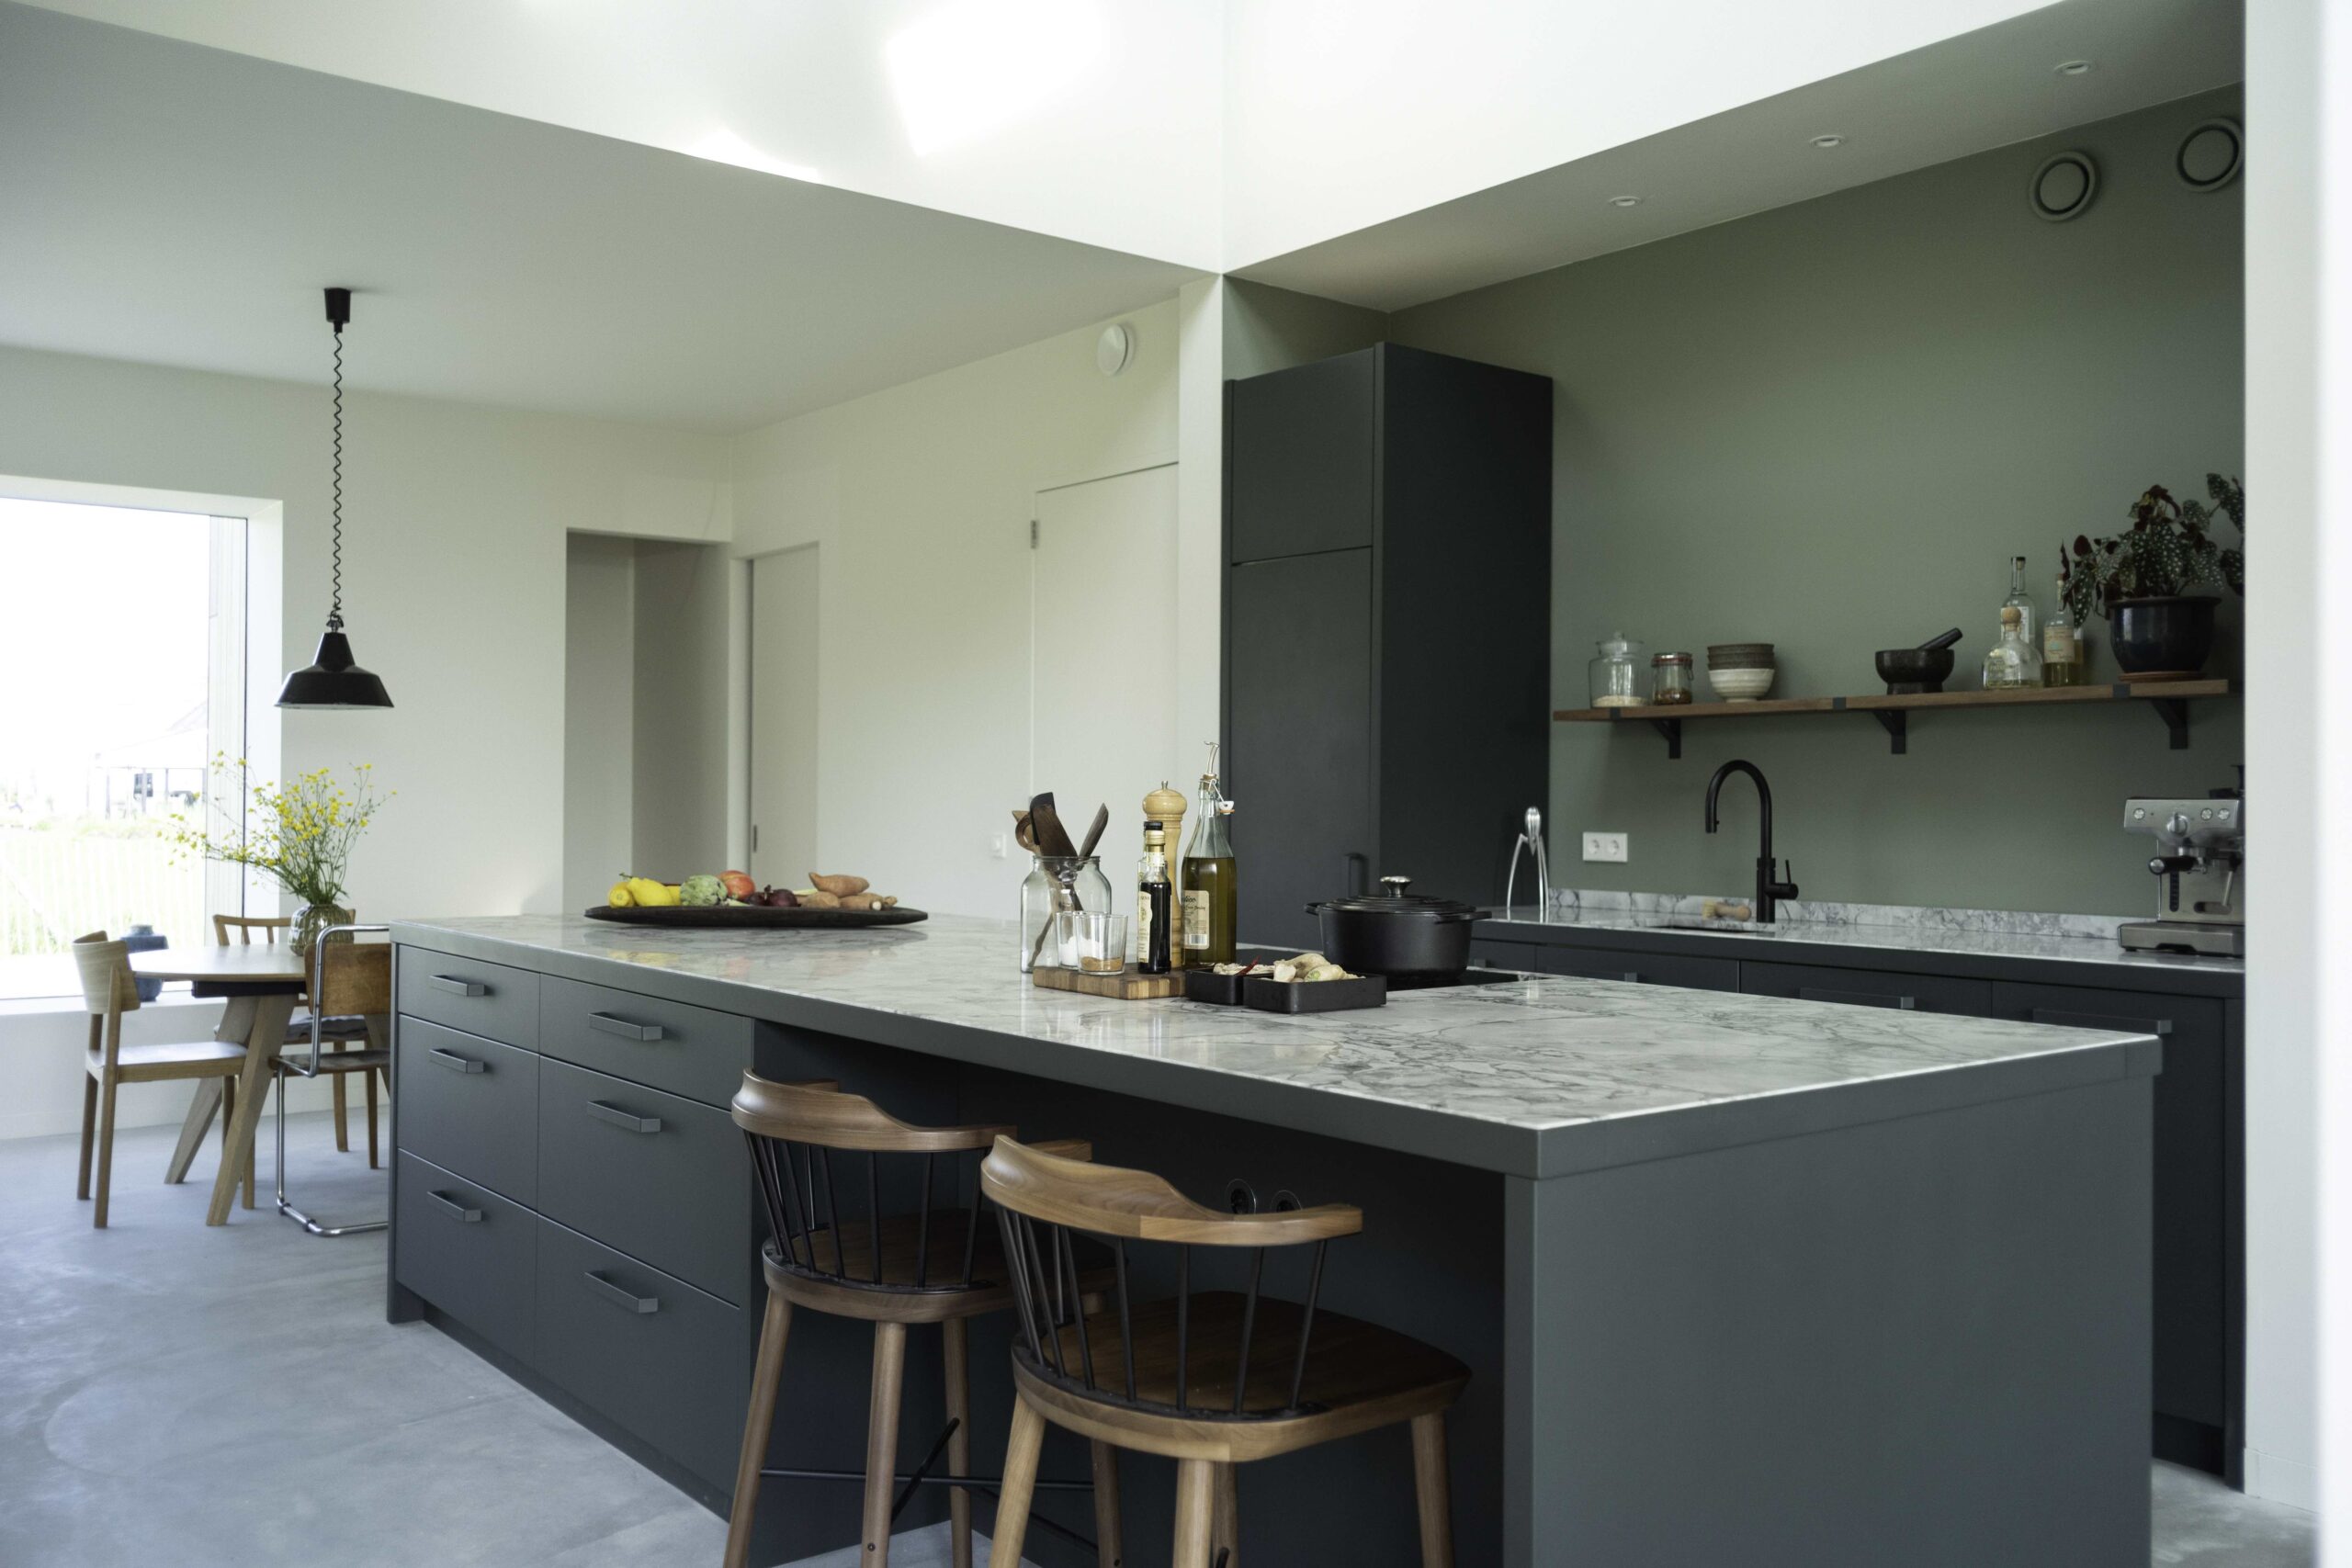 Amsterdamse keuken- en interieur merk Eginstill introduceert slim en modulair keukenconcept Still - Duurzaam Ondernemen